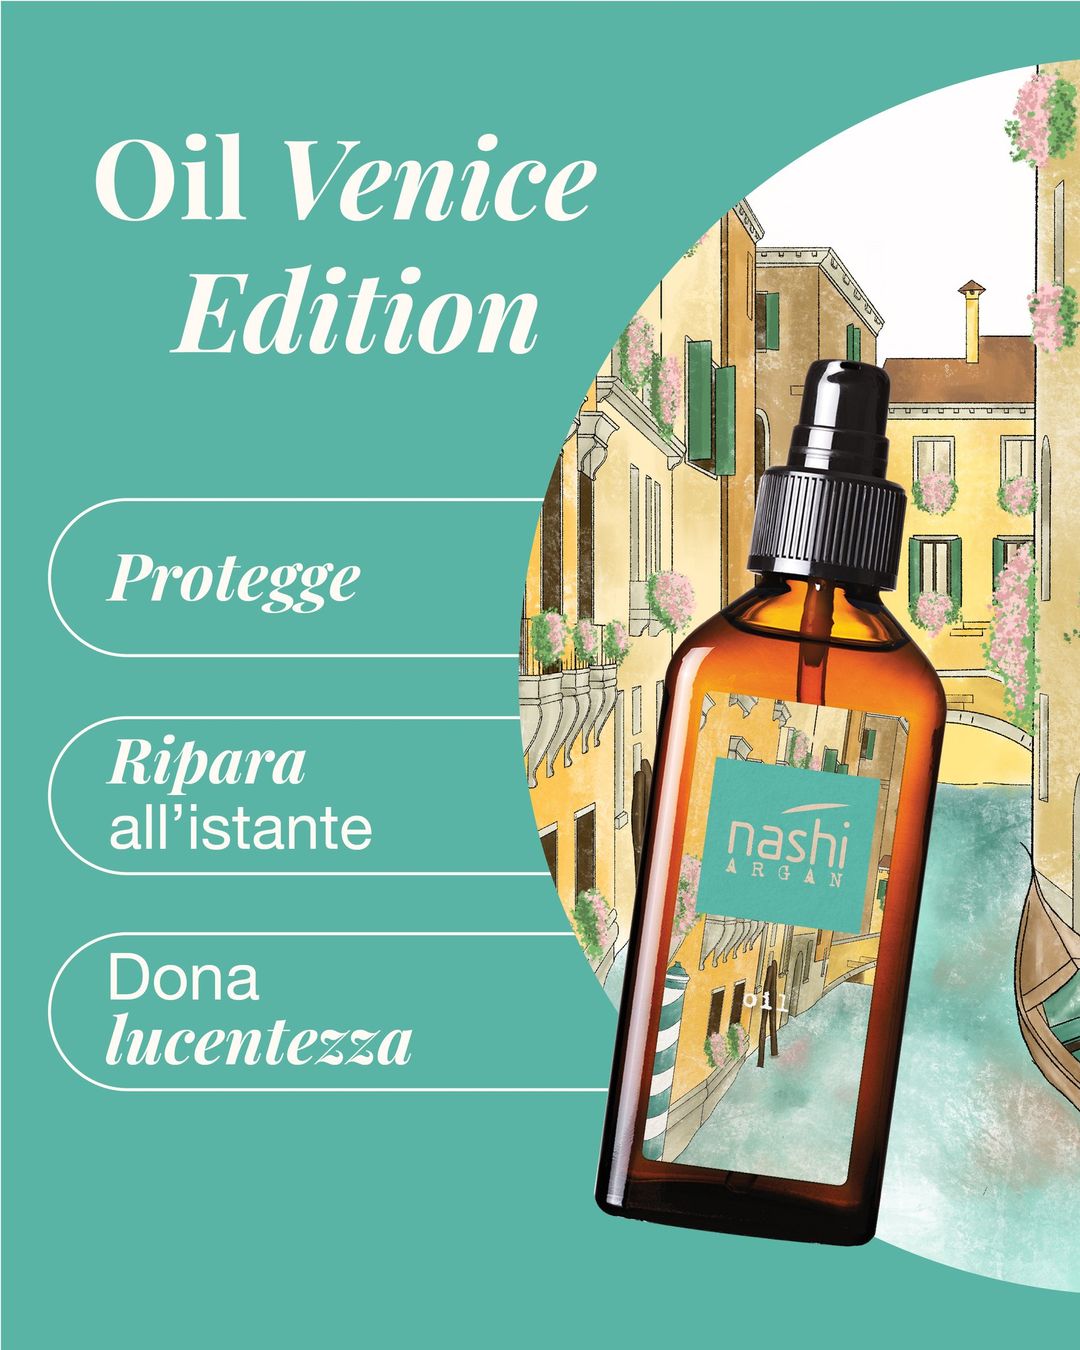 Nashi Promo Oil Venice Edition